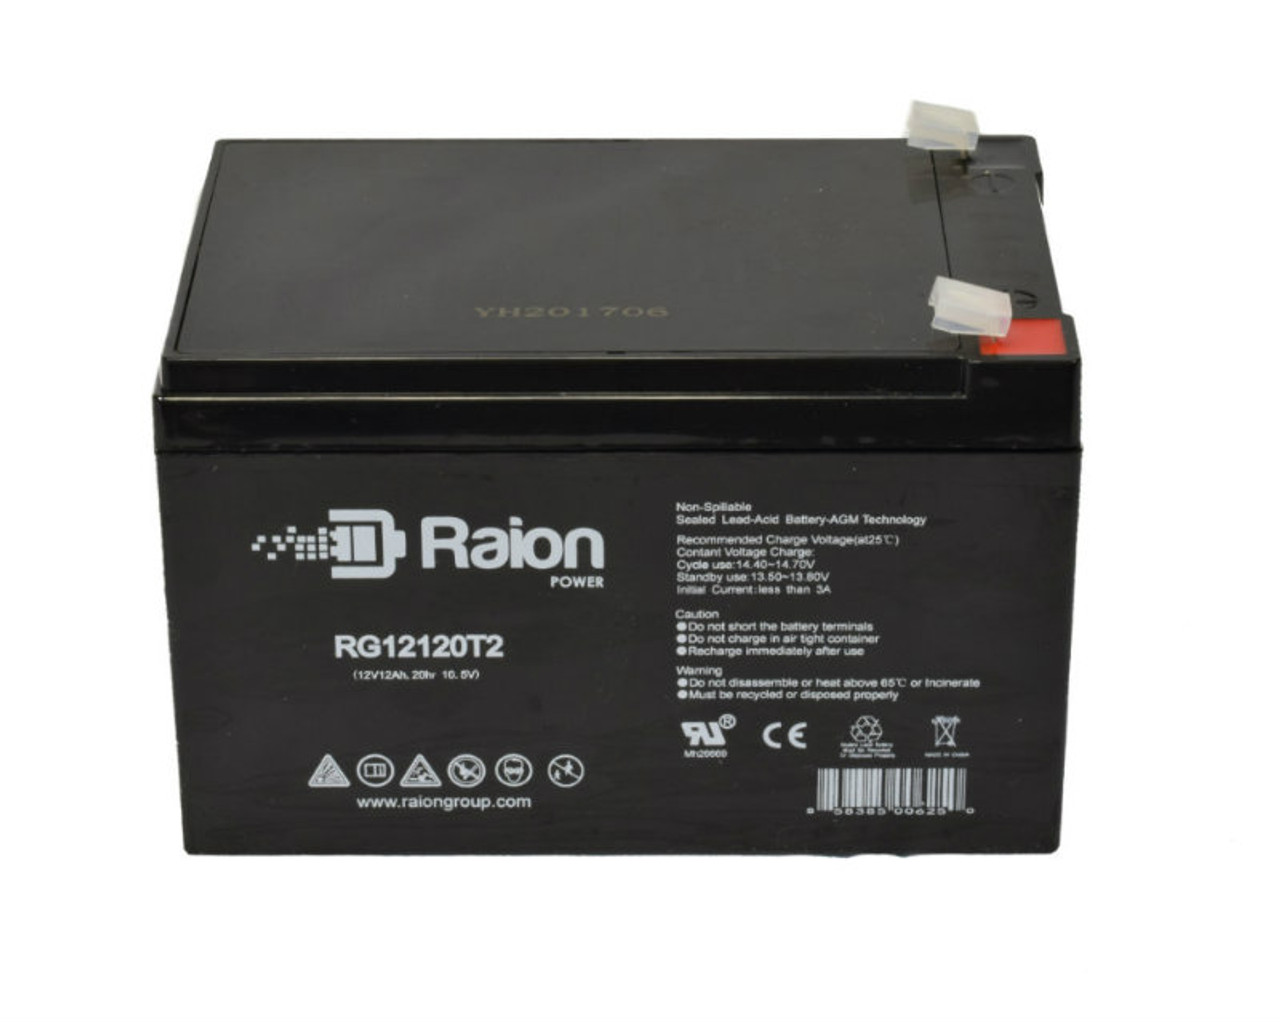 Raion Power RG12120T2 SLA Battery for Kweight Power KW 12-12